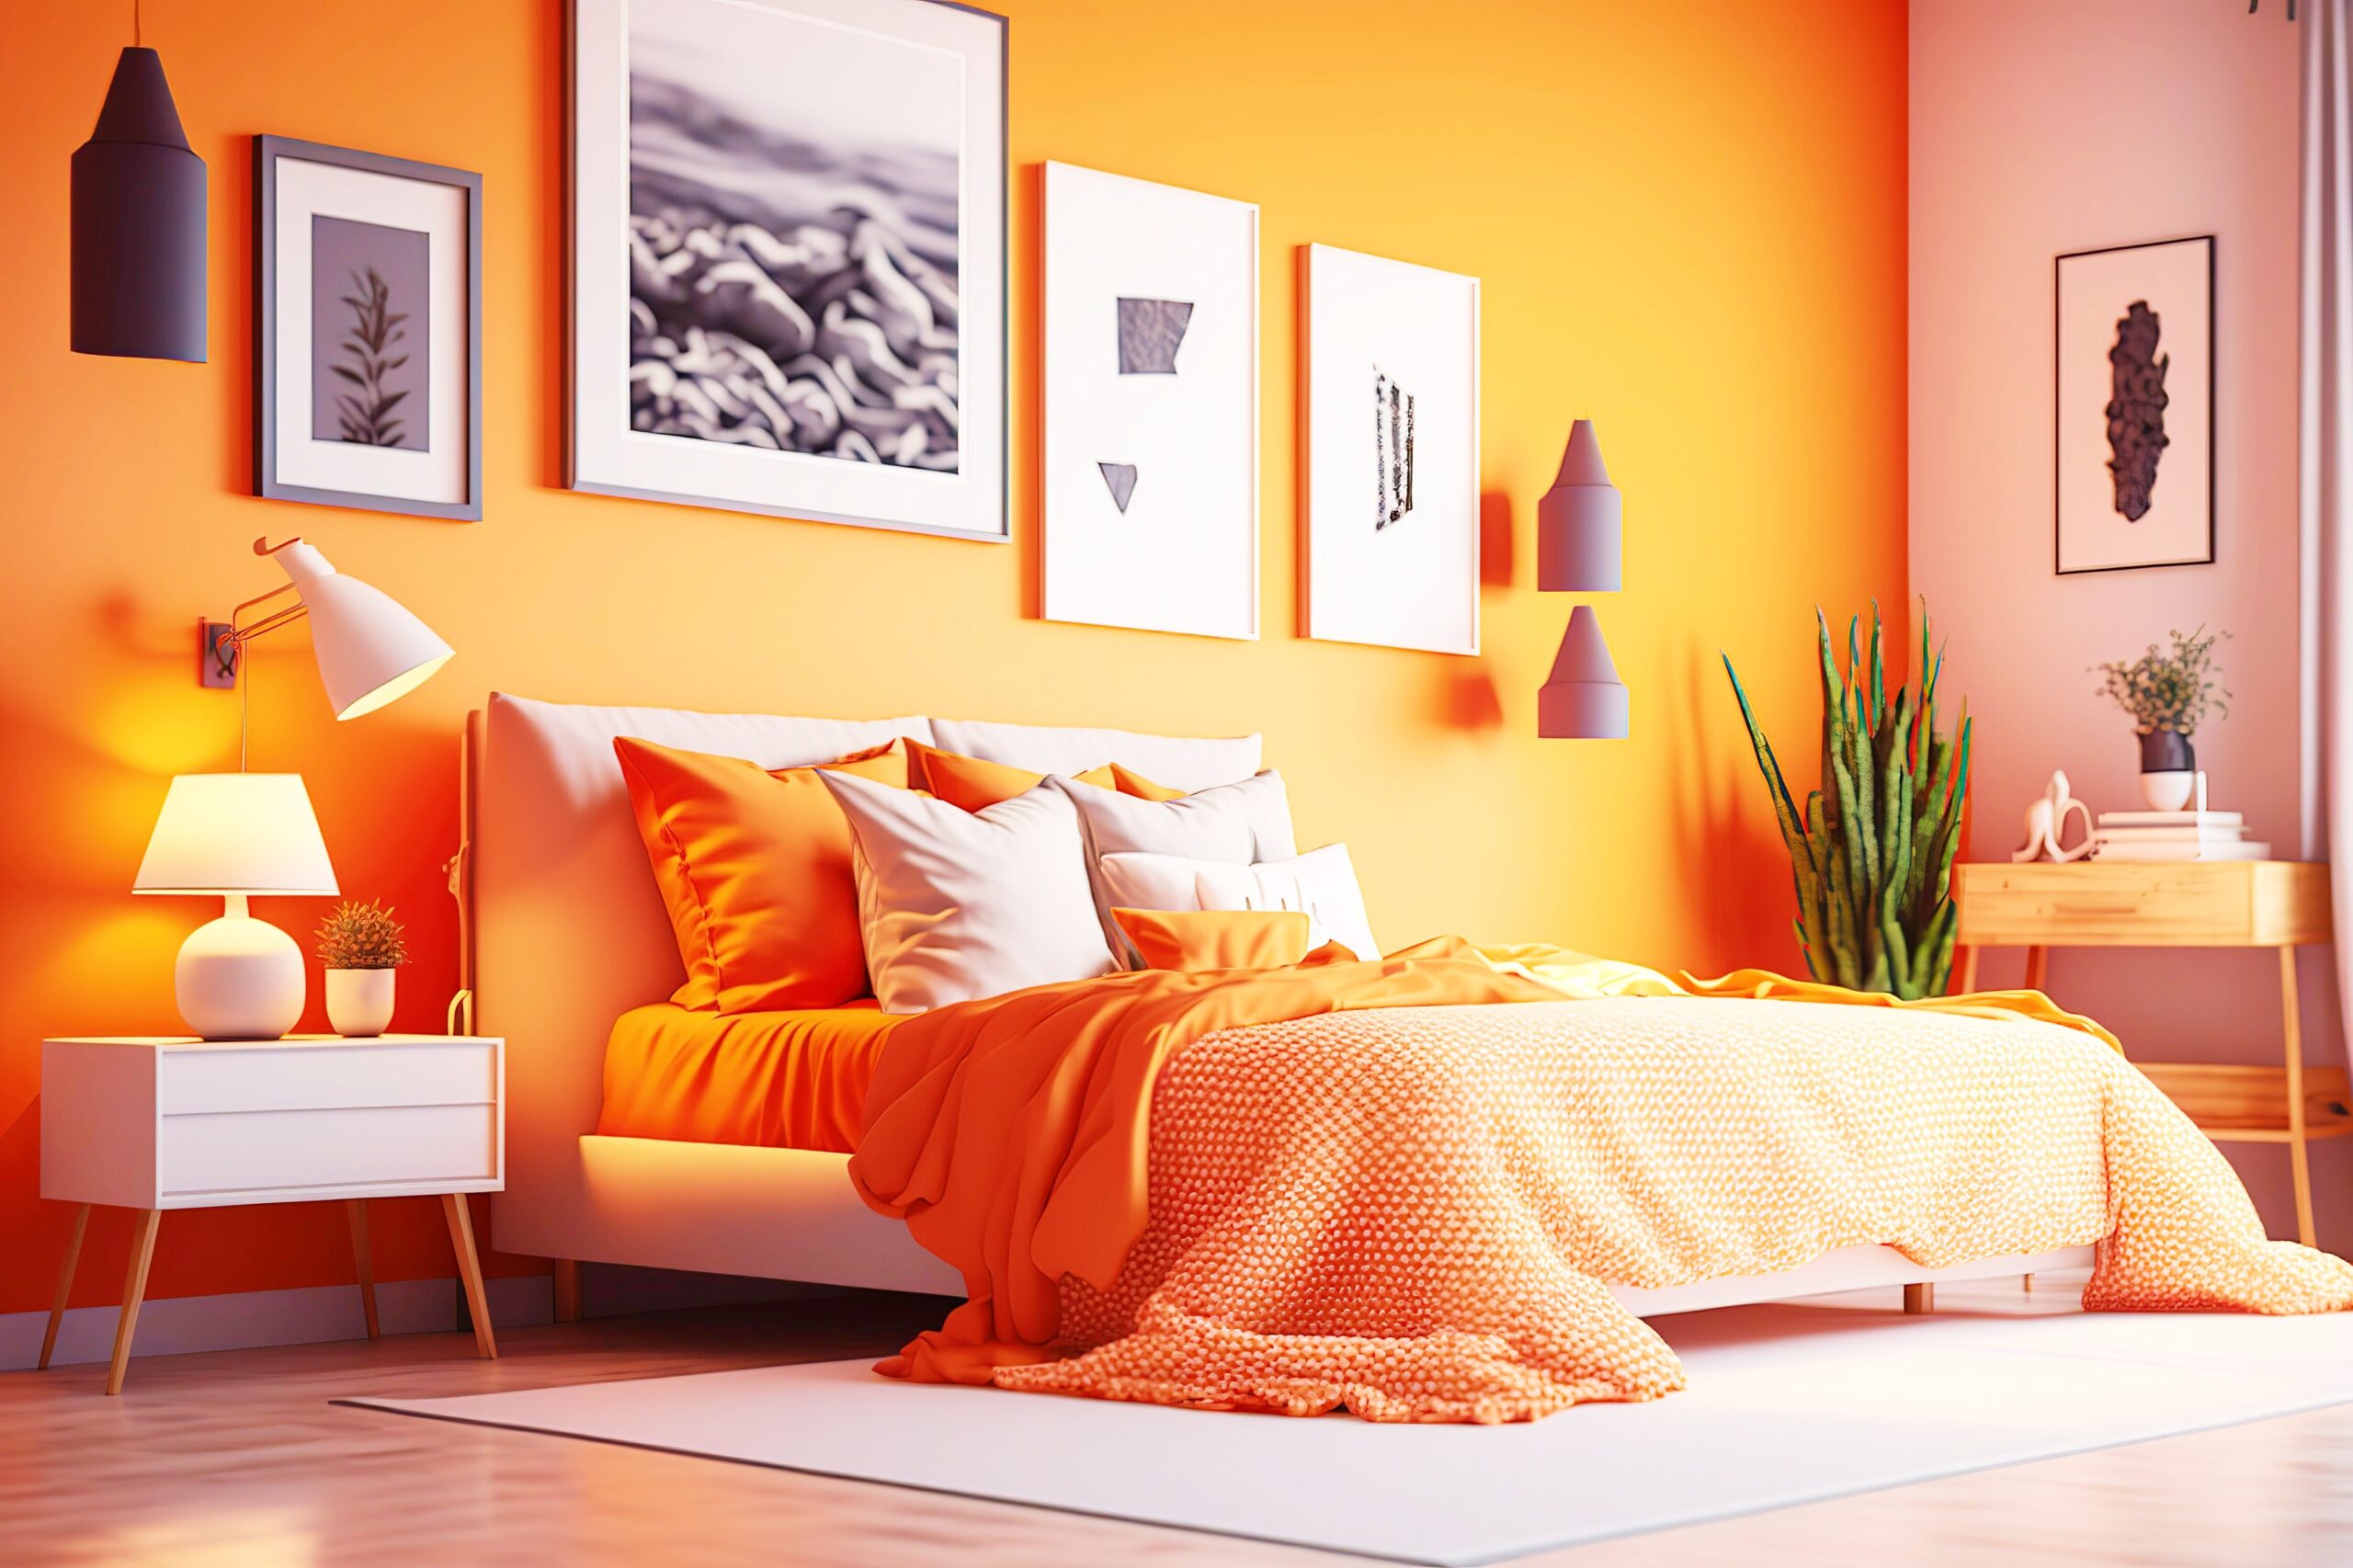 <img src="beautiful.jpg" alt="beautiful orange bedroom with throws"/>